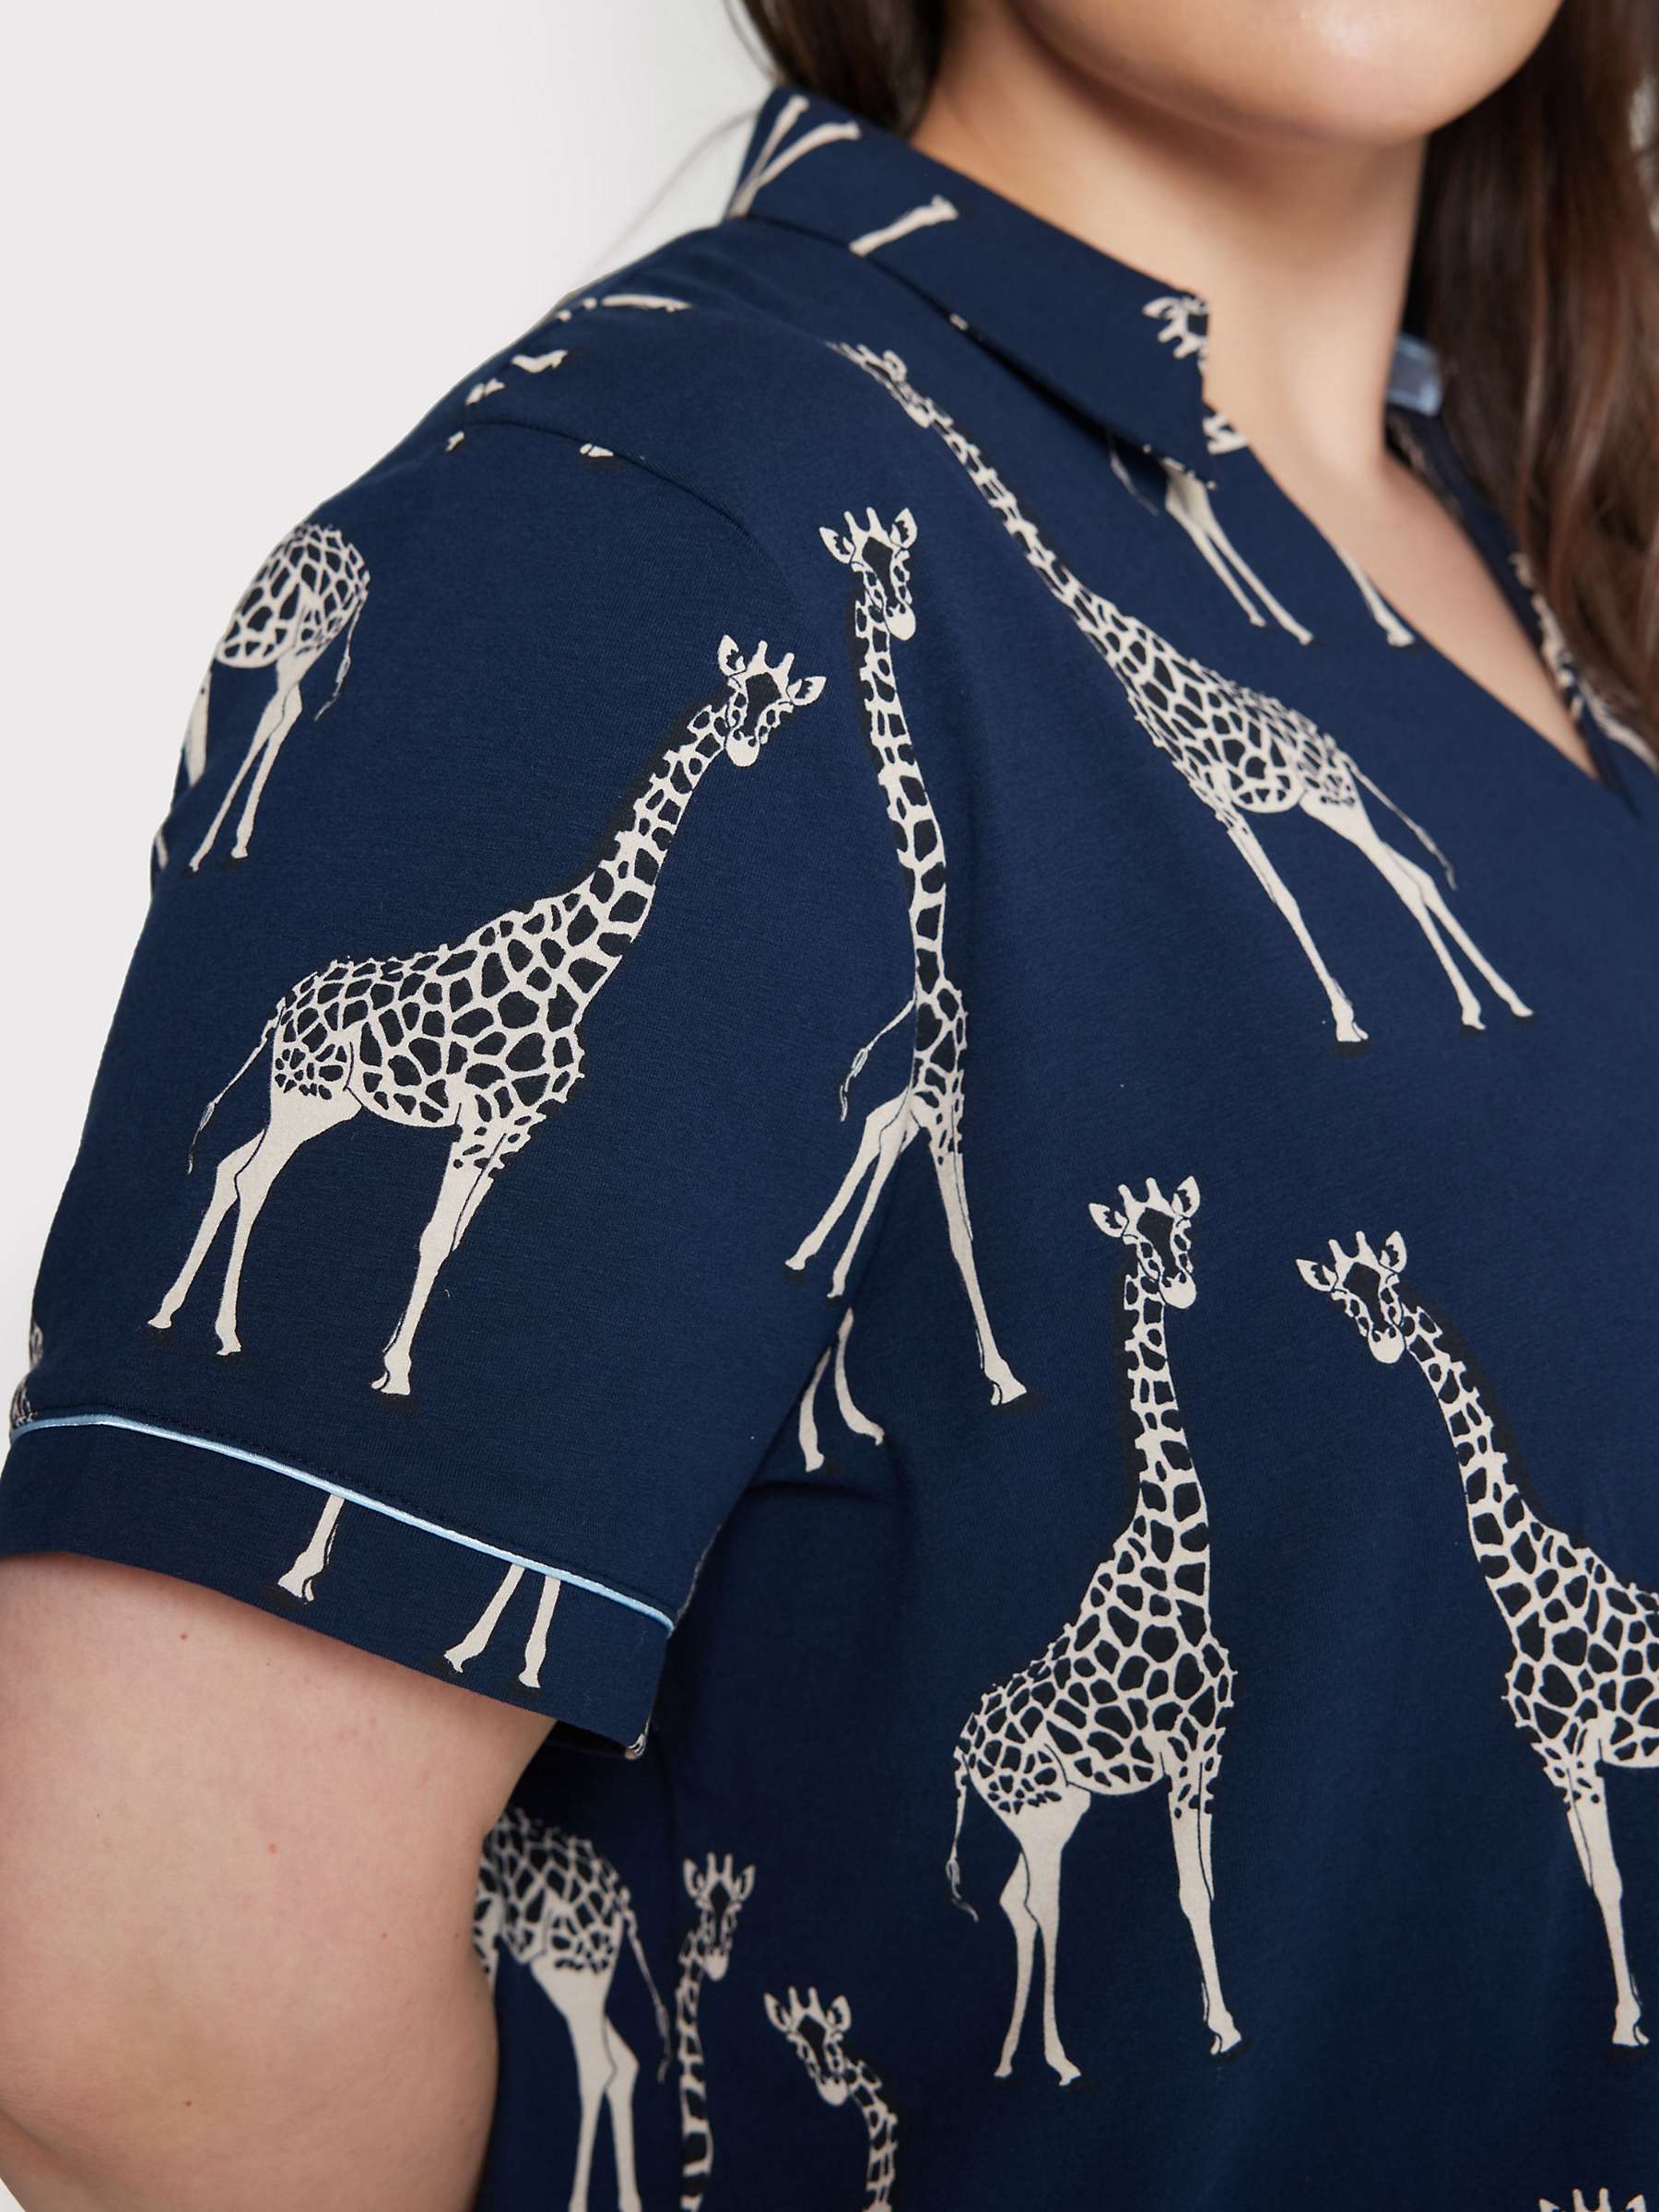 Buy Chelsea Peers Curve Organic Cotton Blend Giraffe Print Shorts Pyjama Set, Navy Online at johnlewis.com